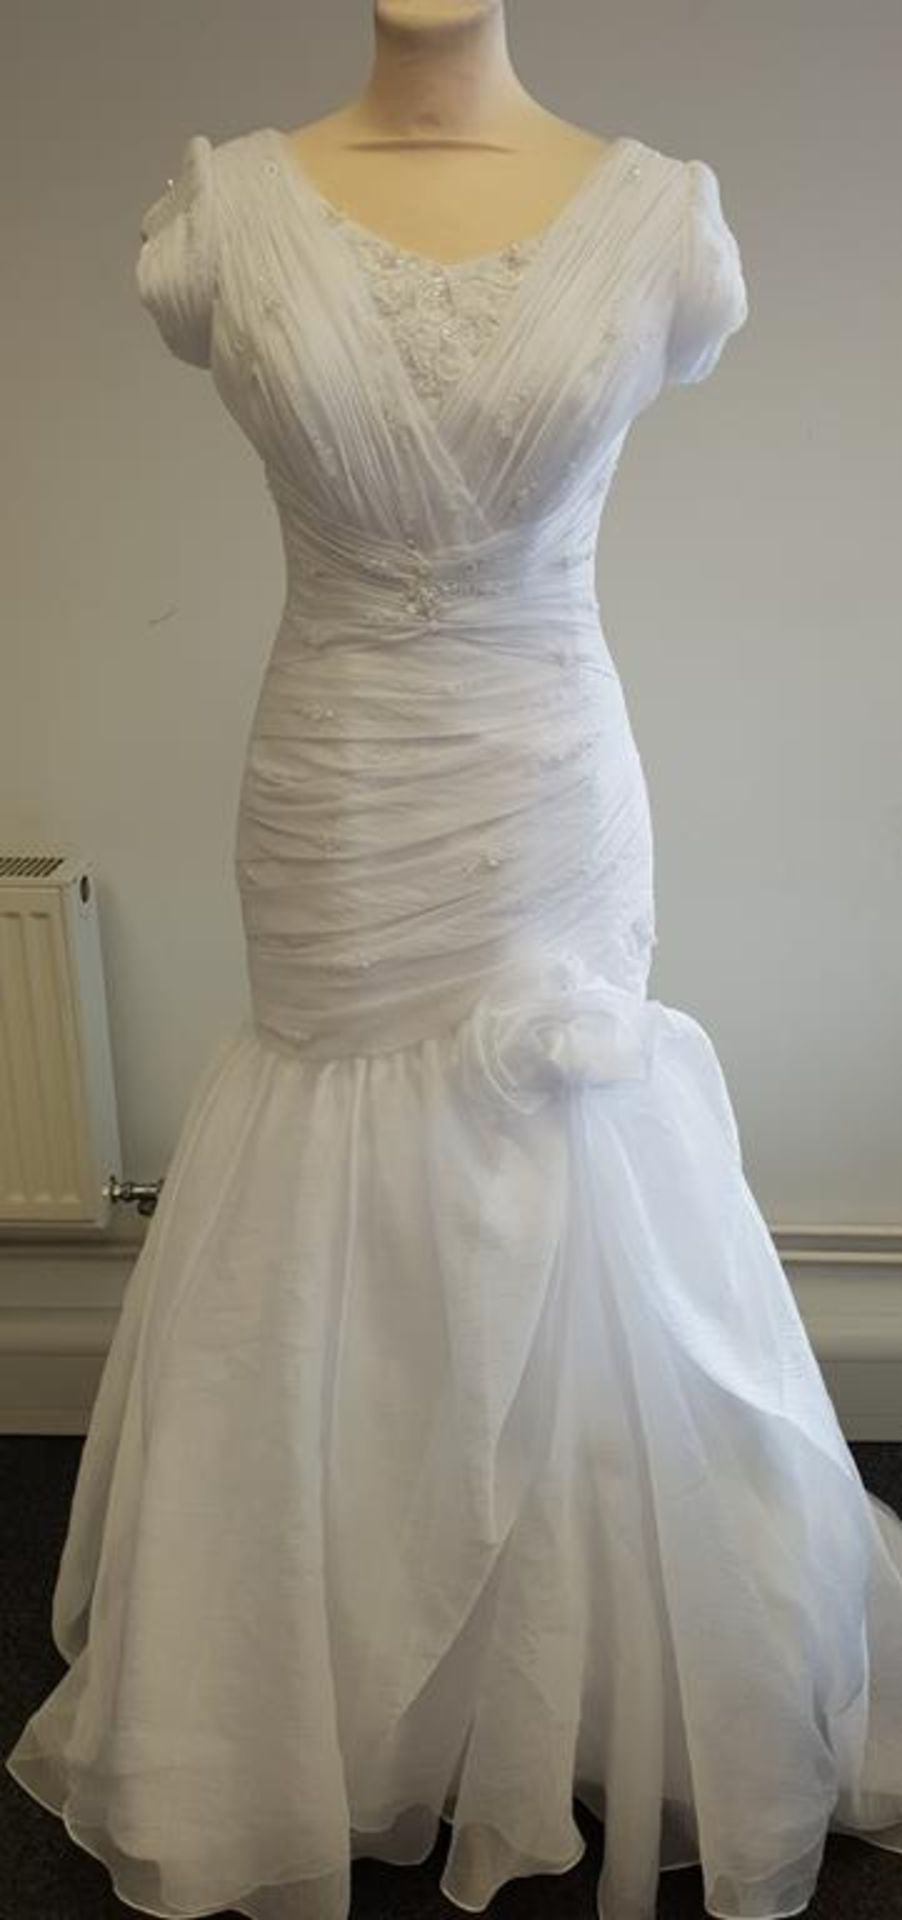 * Bliss size 4 Wedding Dress (RRP £690)